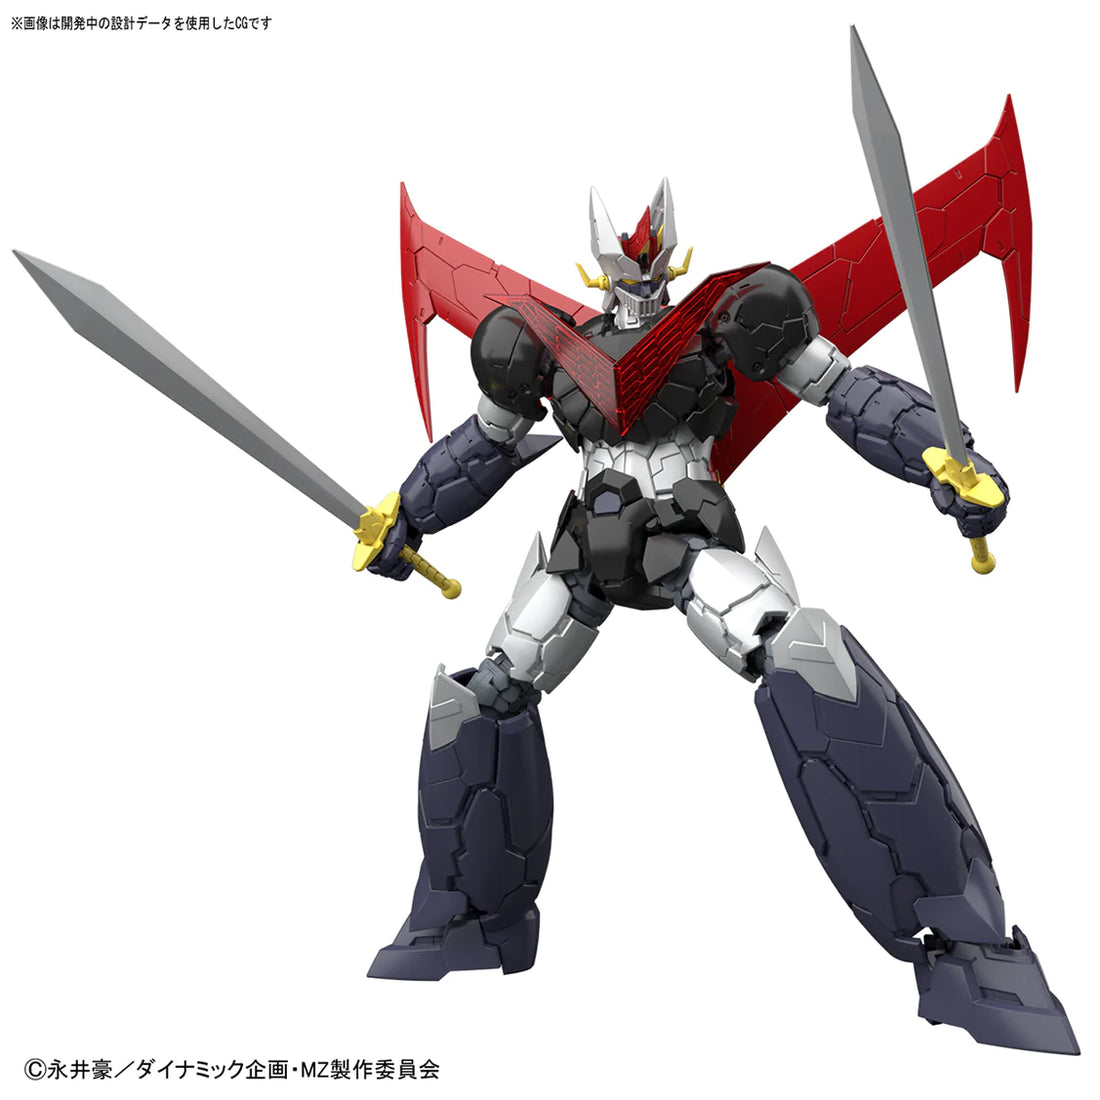 HG 1/144 Great Mazinger (Mazinger Z Infinity Ver.) - Gundam Extra-Your BEST Gunpla Supplier